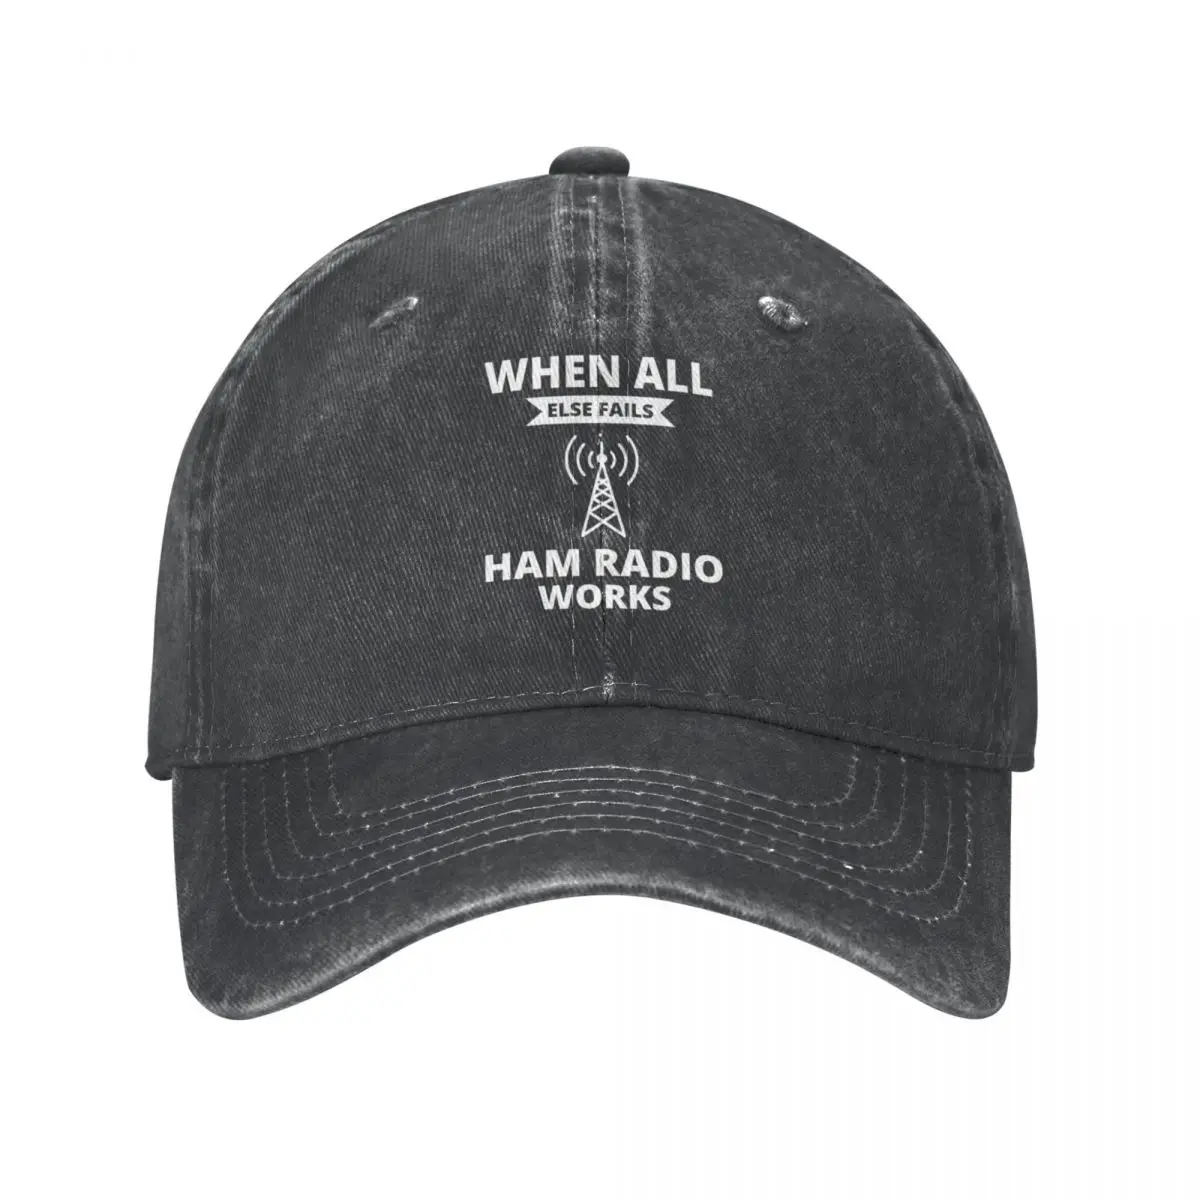 

Amateur Ham Radio Operator Humor Gift Cap Cowboy Hat Rugby wild ball hat Fishing caps Ladies hat Men's